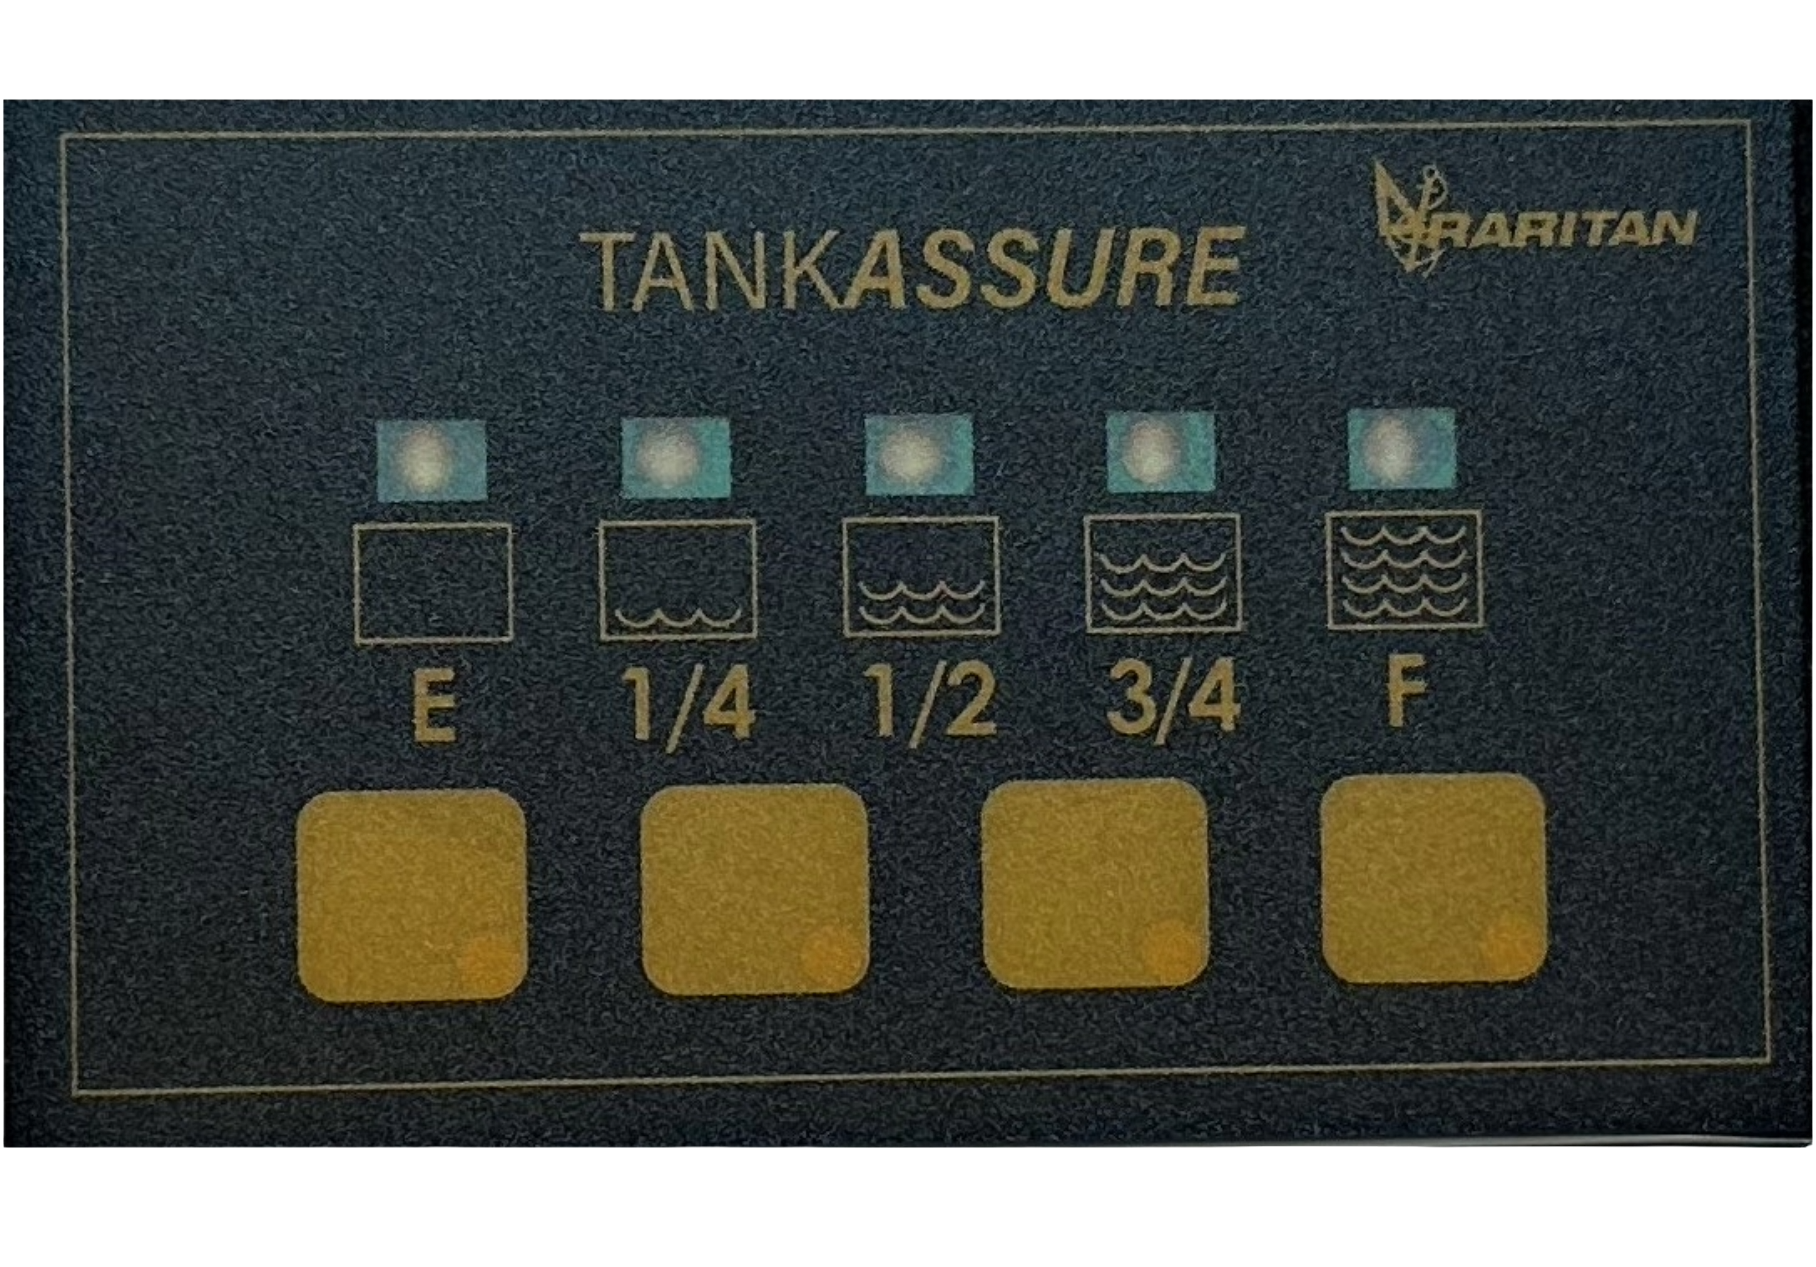 TankAssure Tank Monitor by Raritan